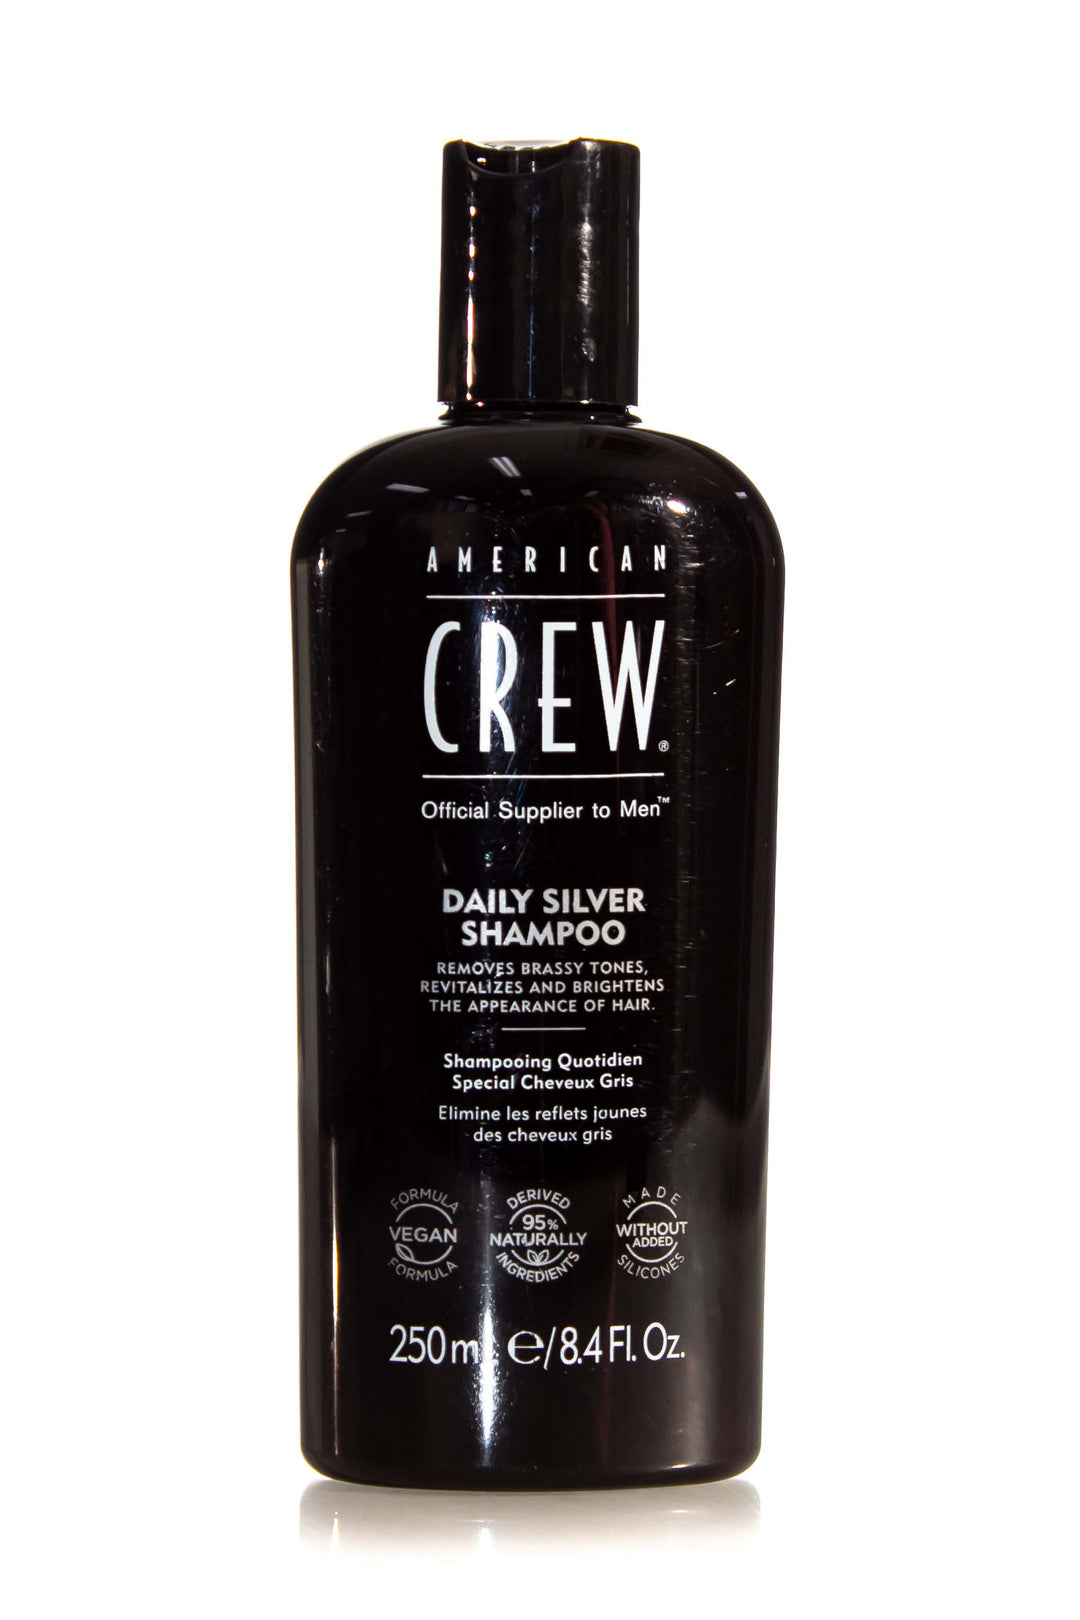 American crew silver shampoo